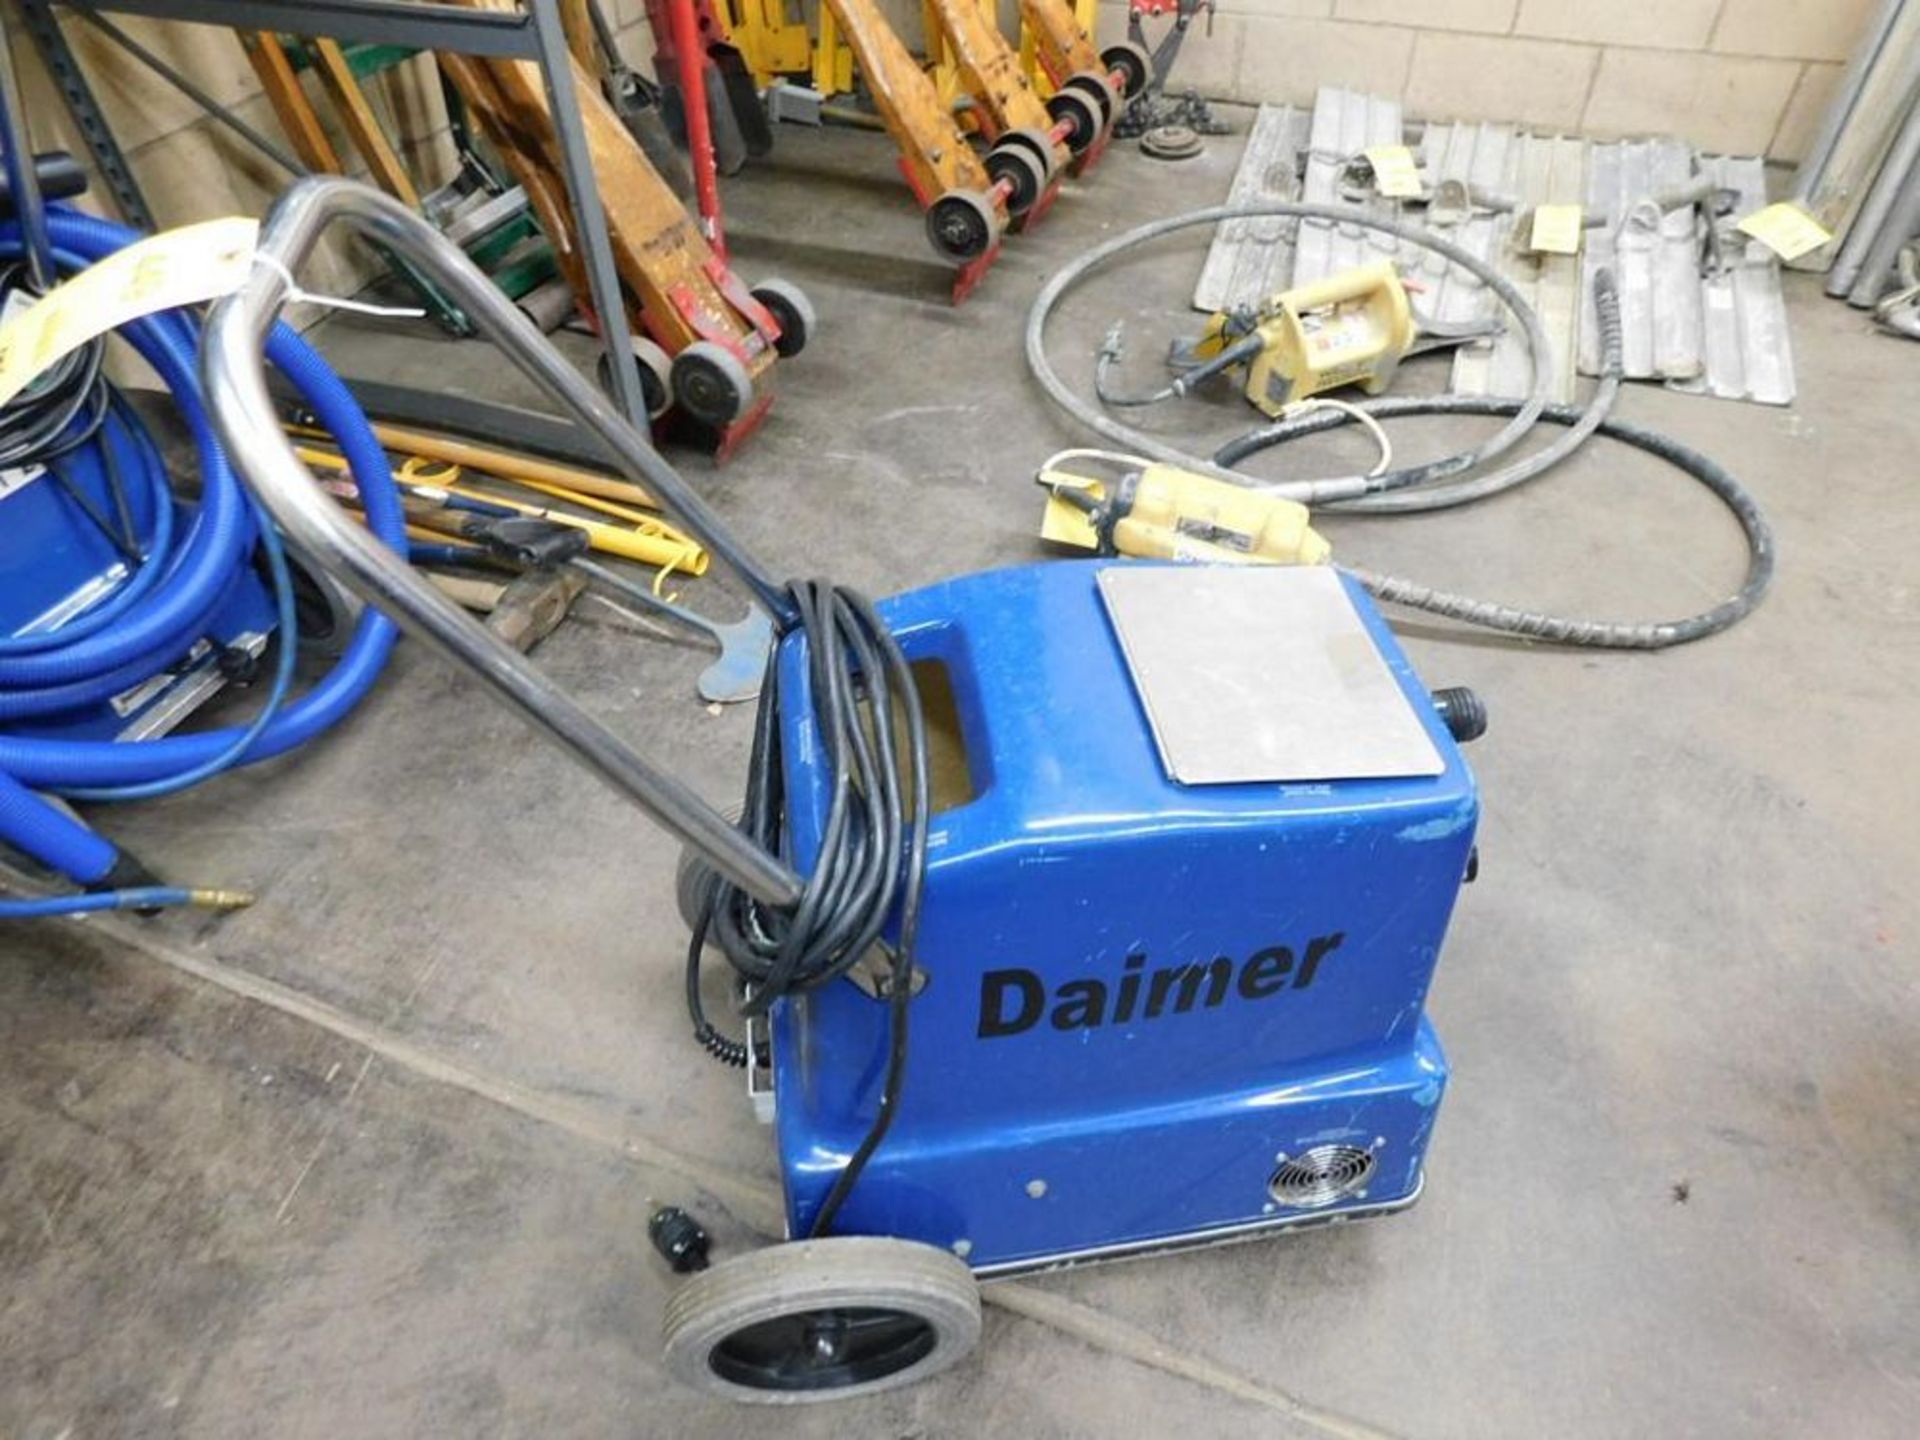 Daimer Carpet Extractor/Shampooer (LOCATION: 318 N. Milwaukee Ave., Wheeling, IL 60090)